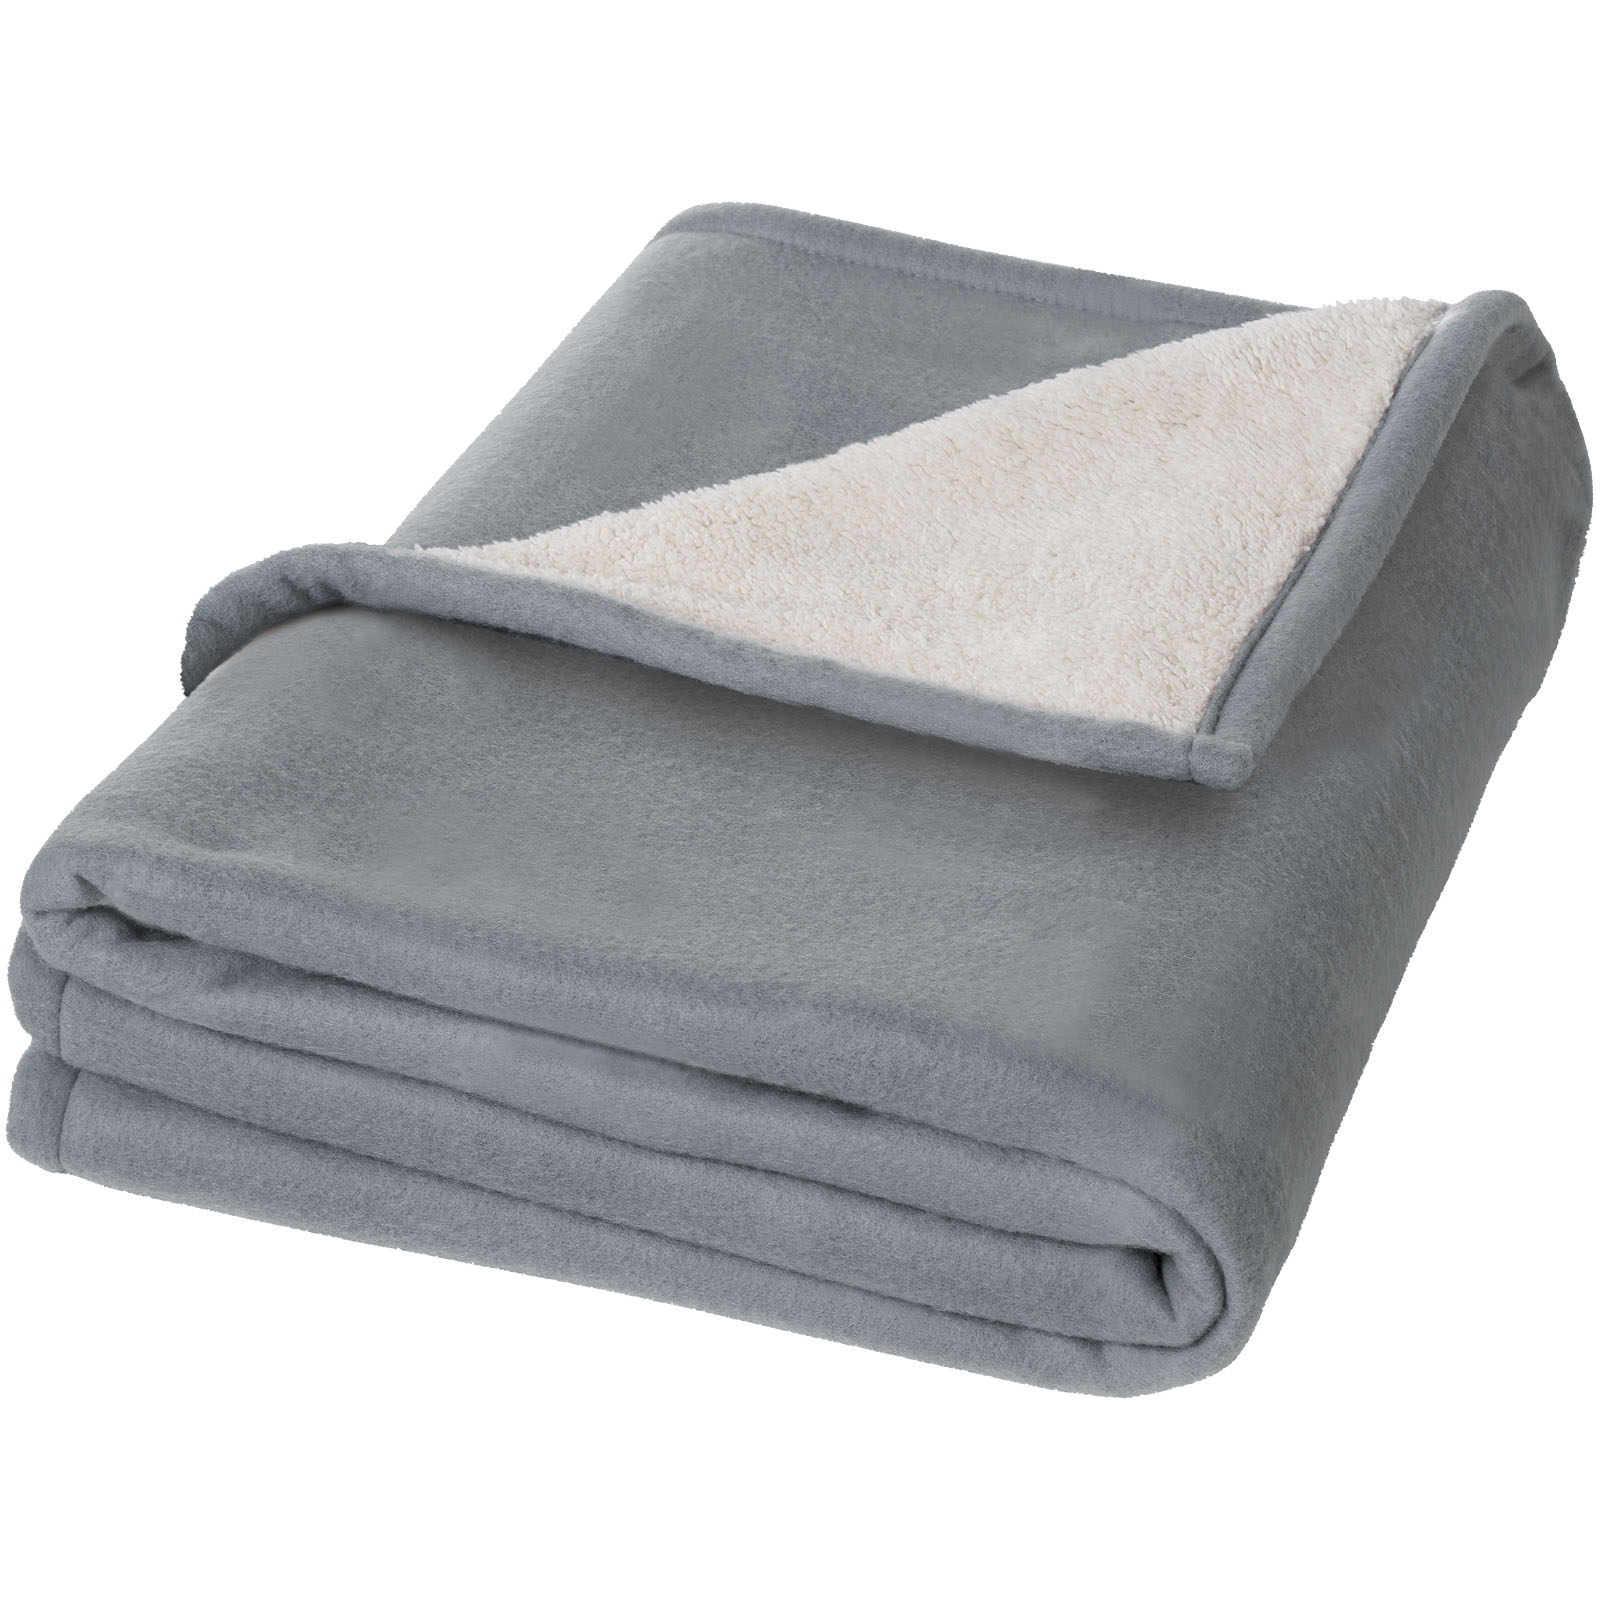 Blankets - Springwood soft fleece and sherpa plaid blanket